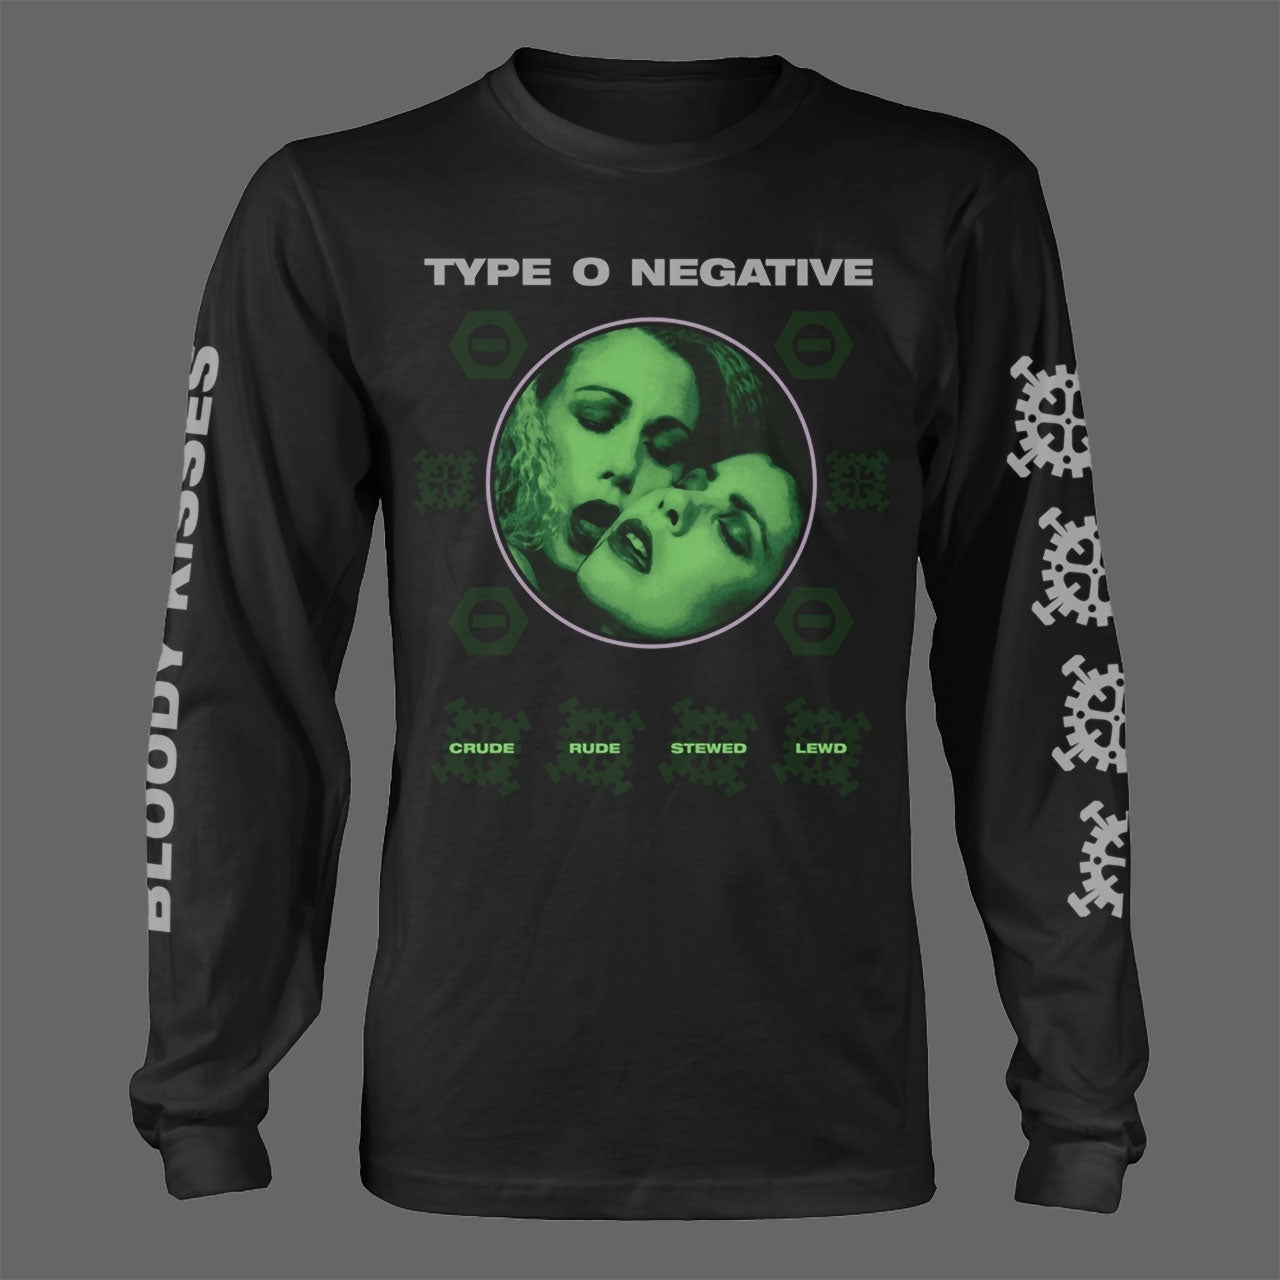 Type O Negative - Bloody Kisses / Crude Rude Stewed Lewd (Long Sleeve T-Shirt)